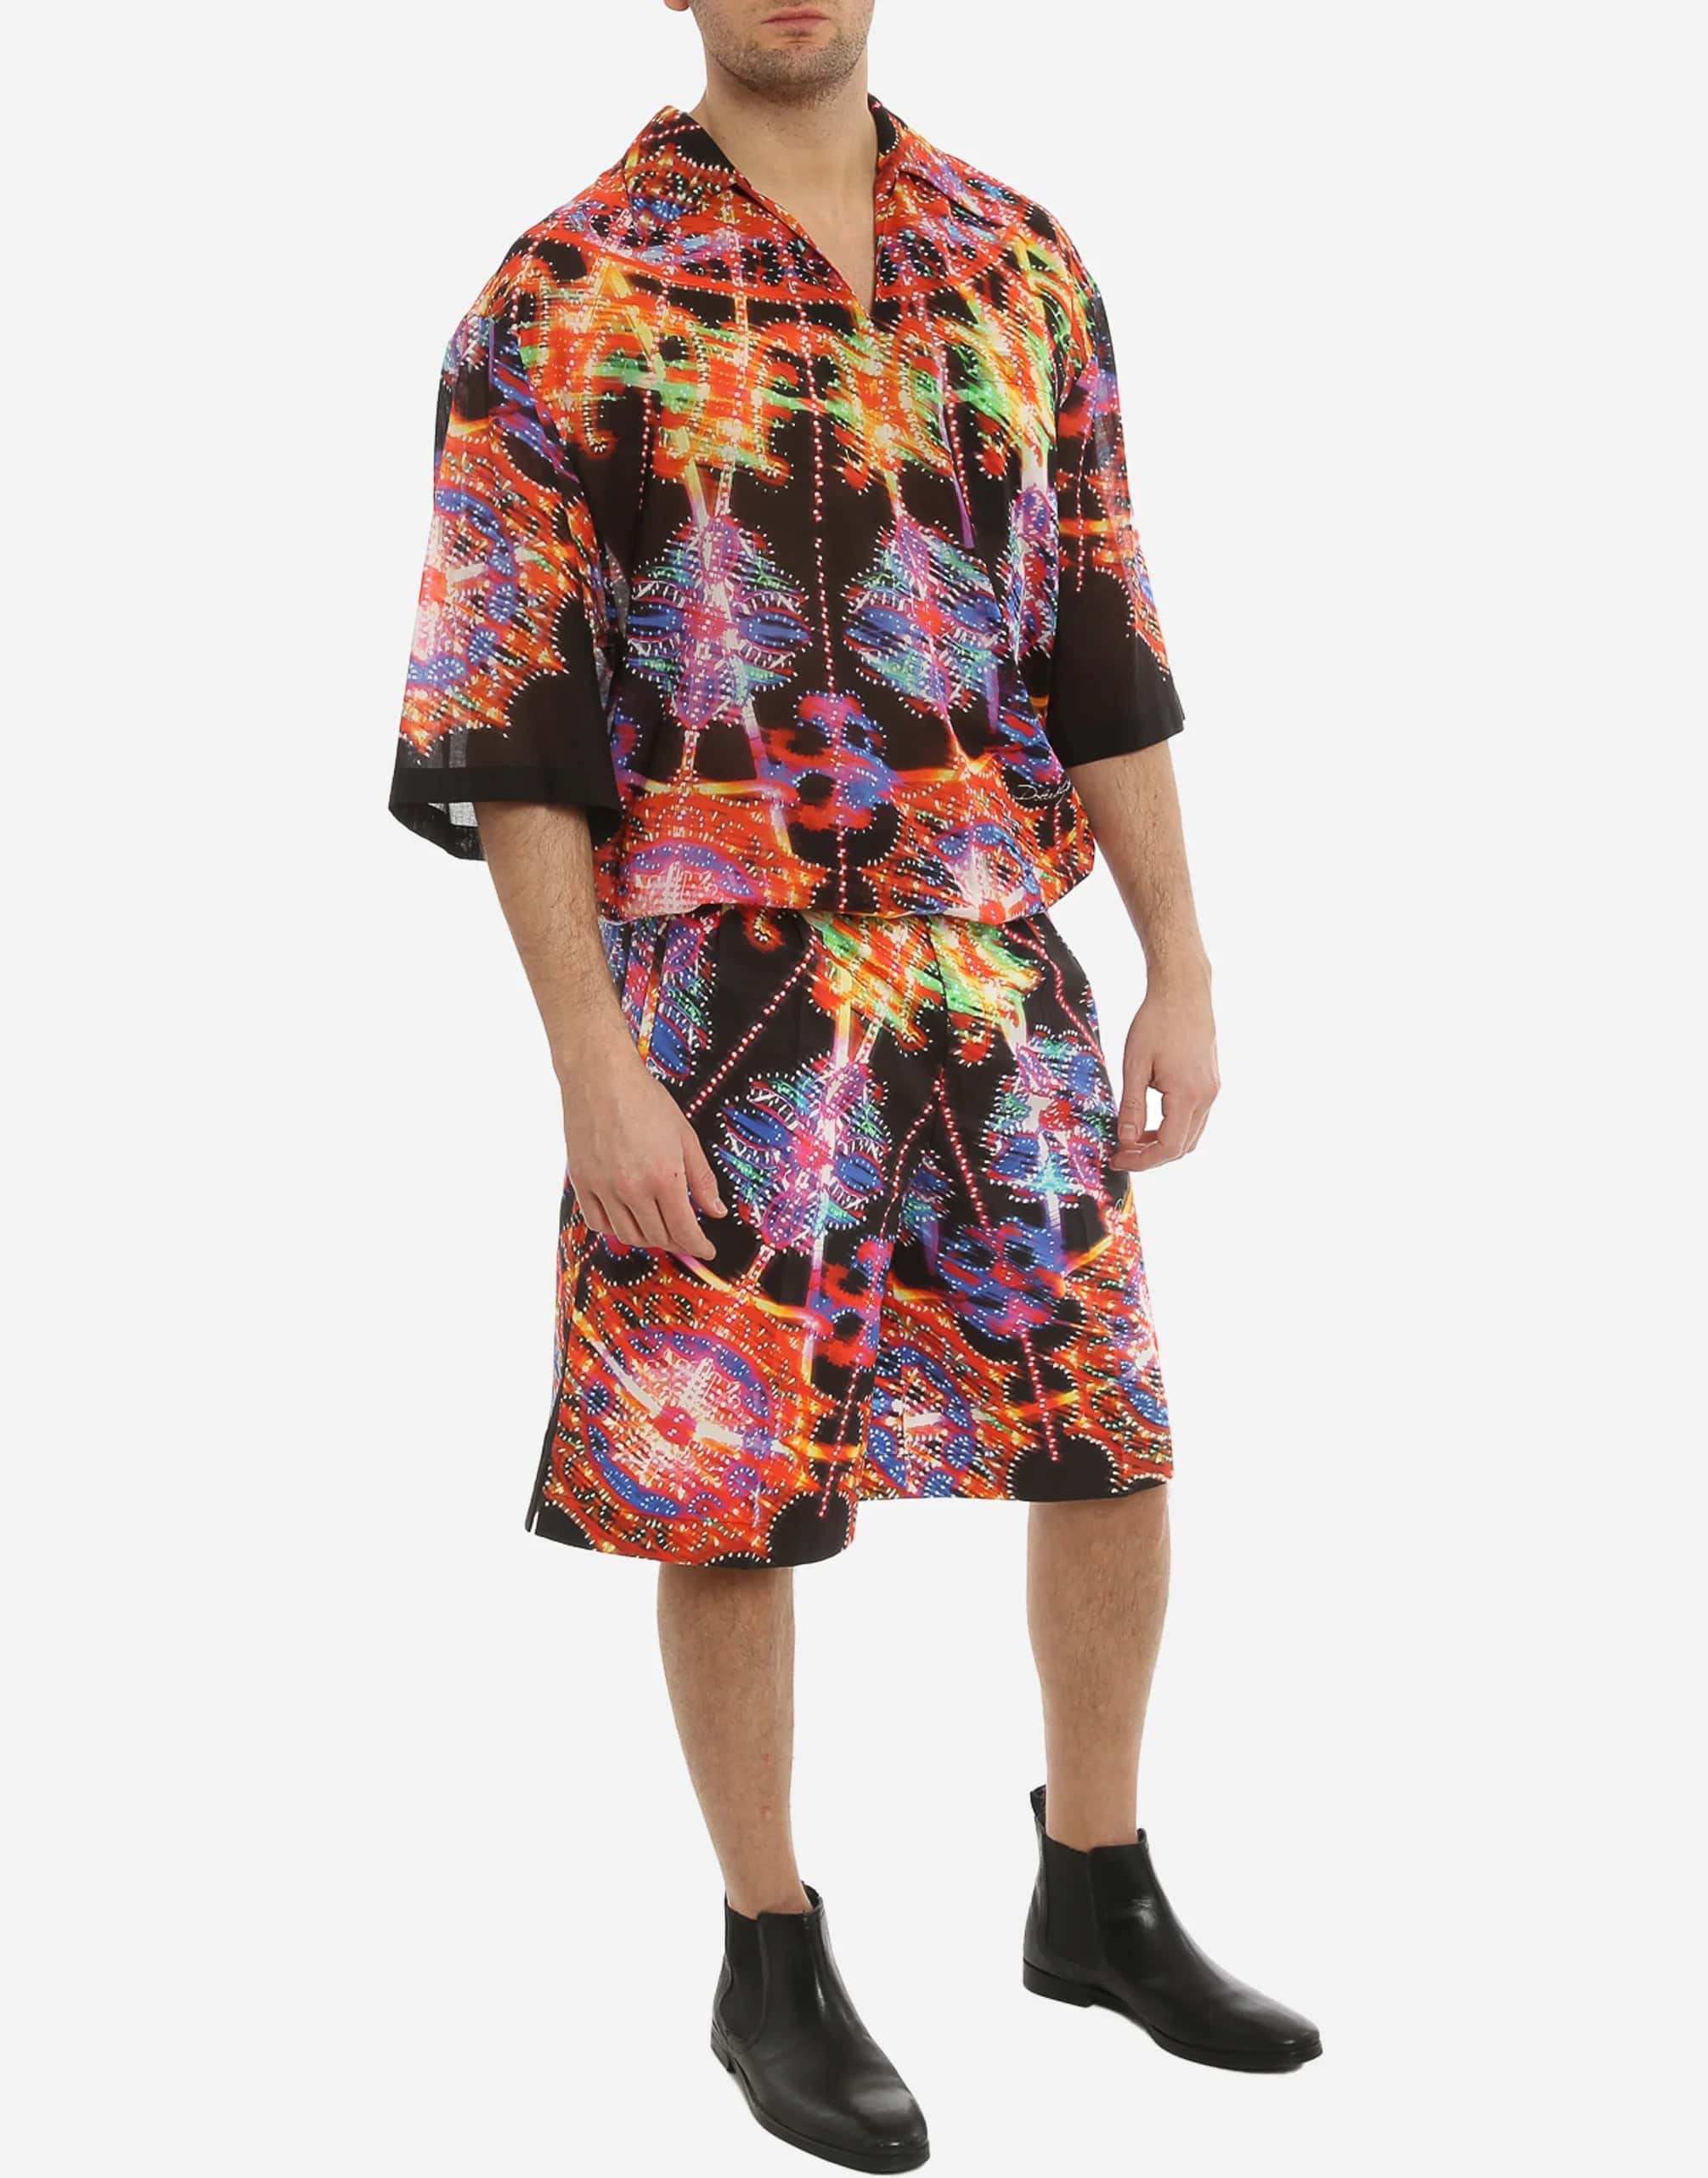 Dolce & Gabbana Psychedelic Printed Bermuda Shorts